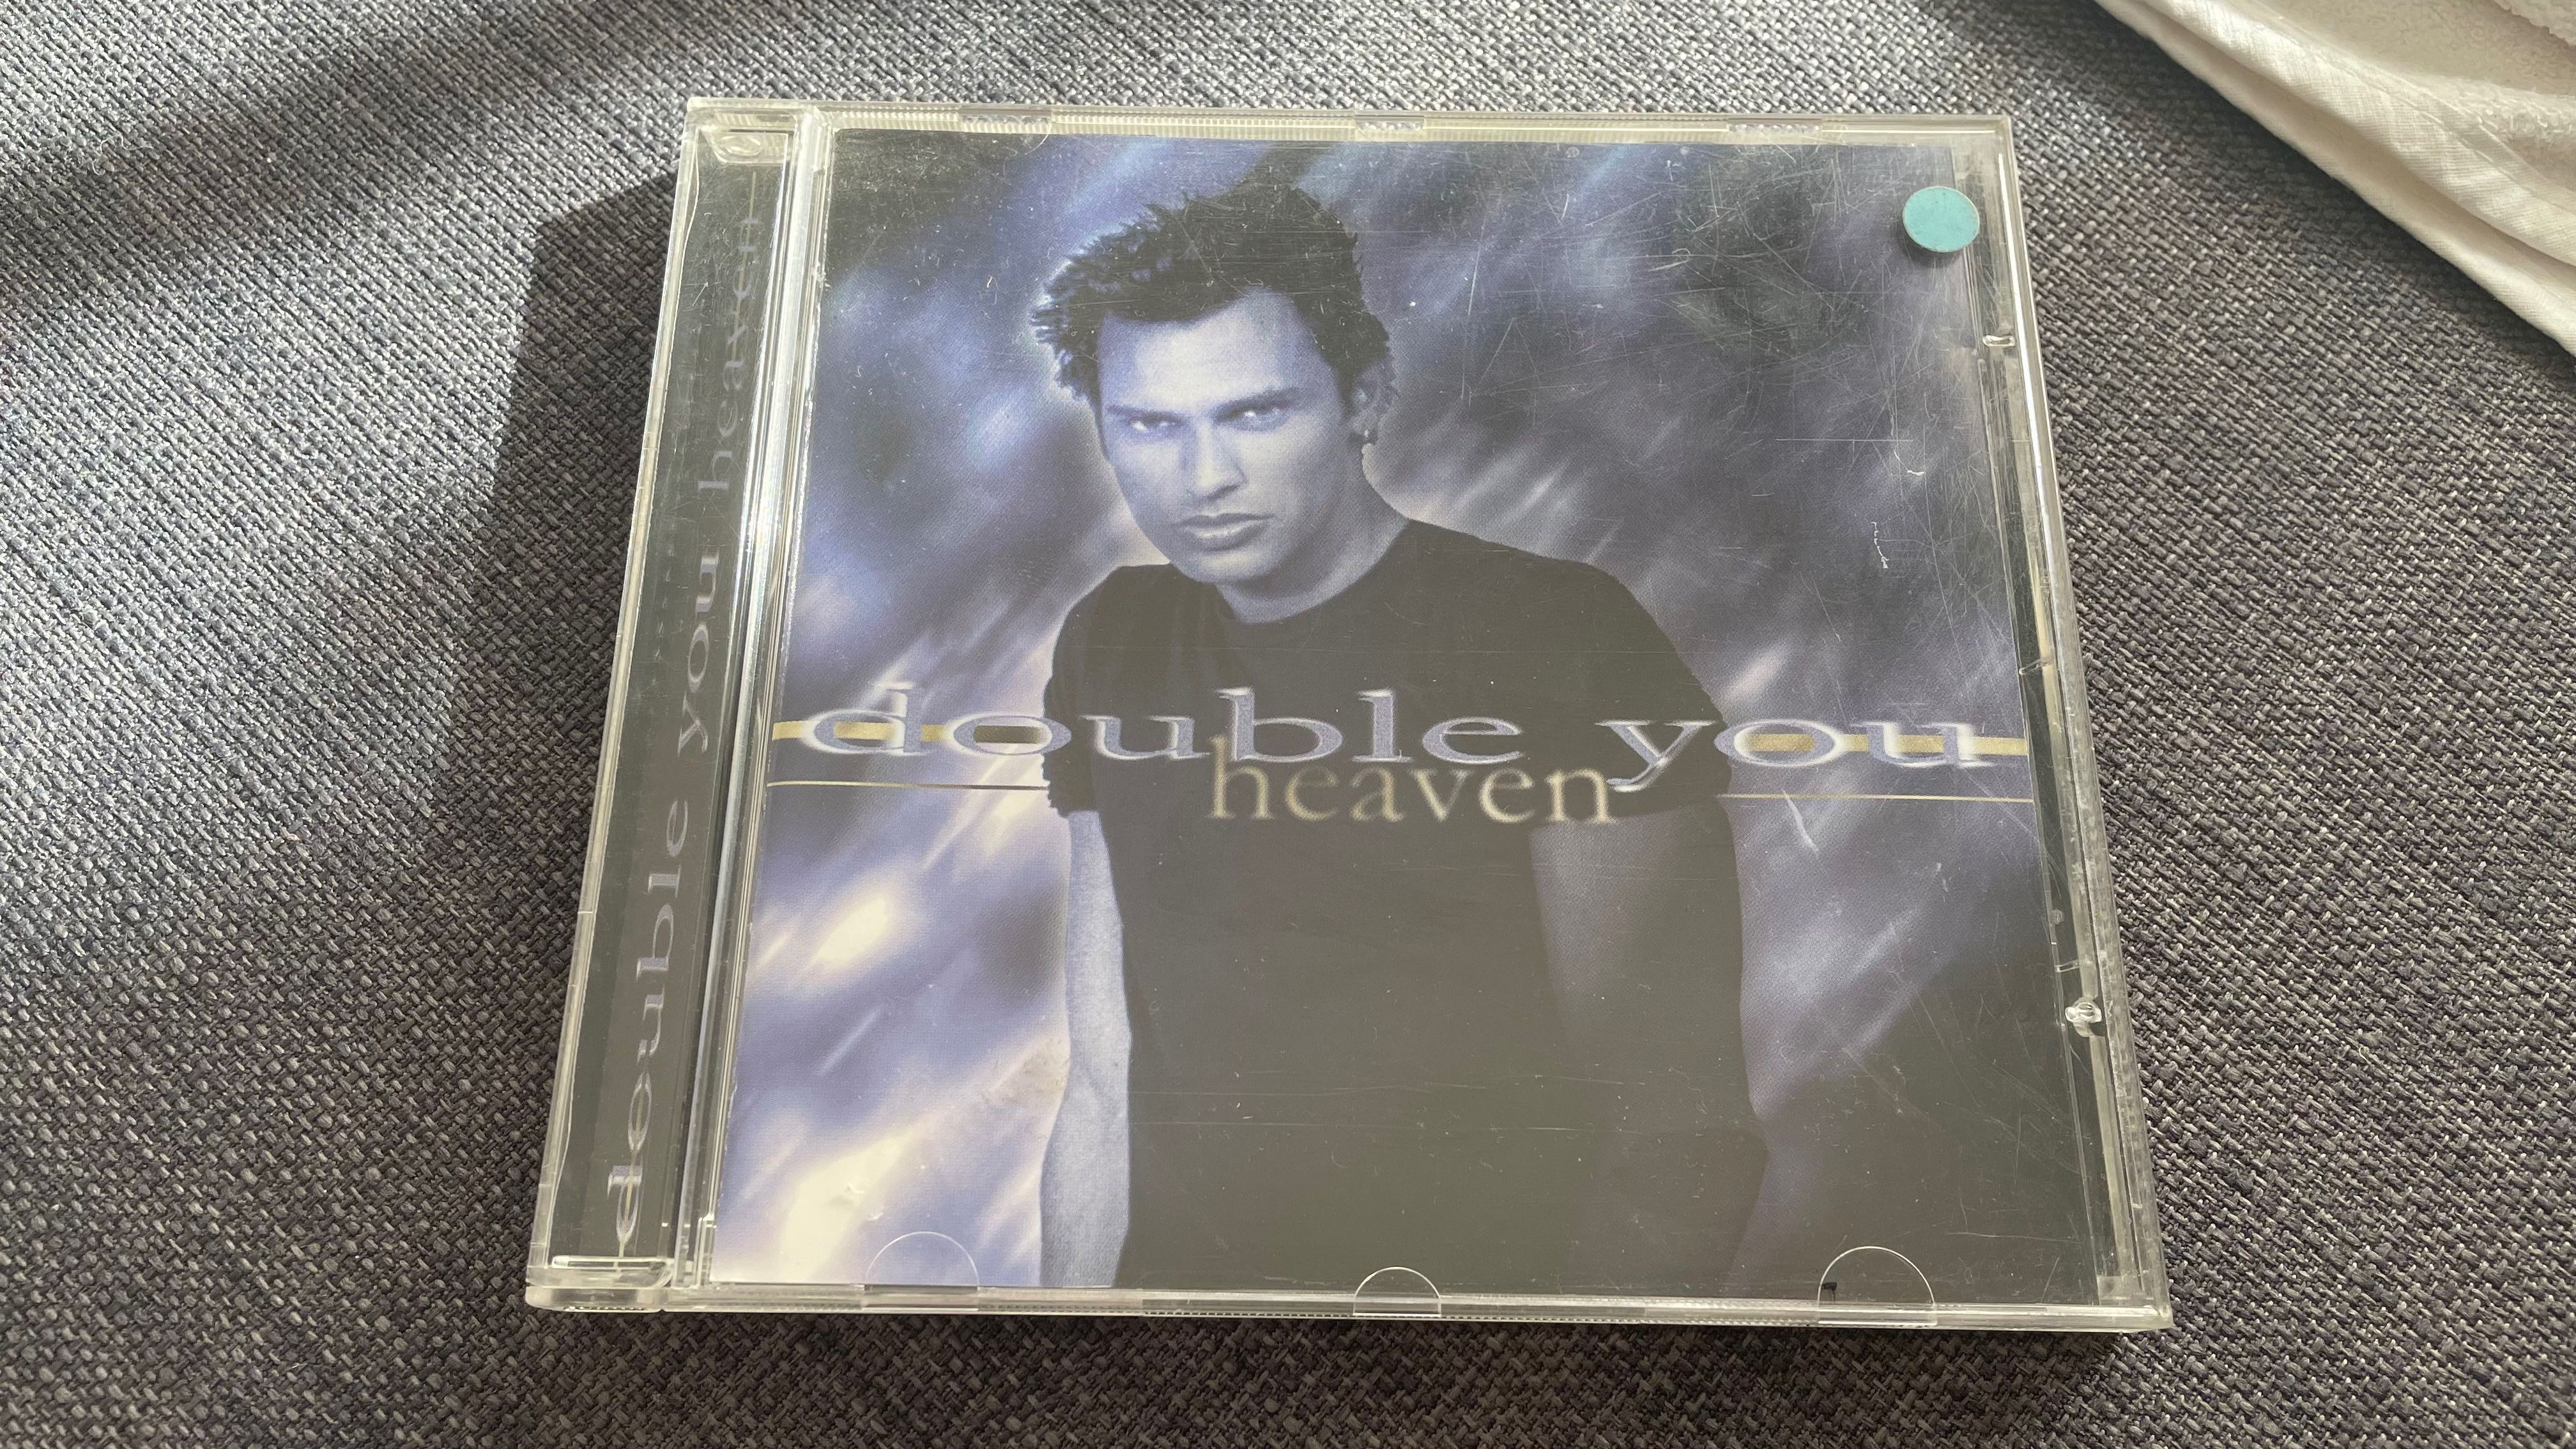 Double You – Heaven - cd